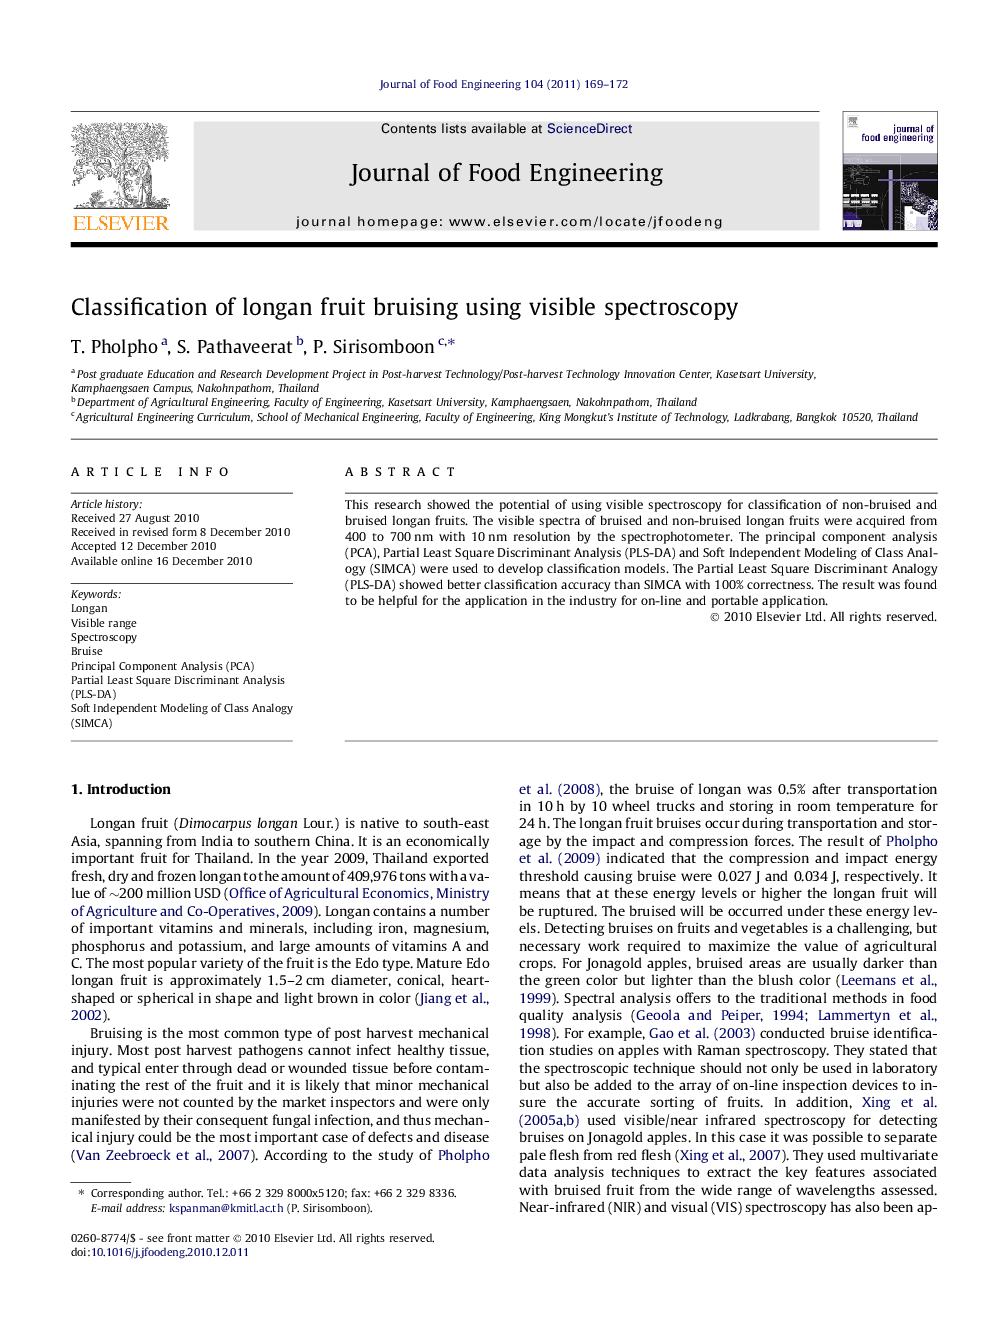 Classification of longan fruit bruising using visible spectroscopy